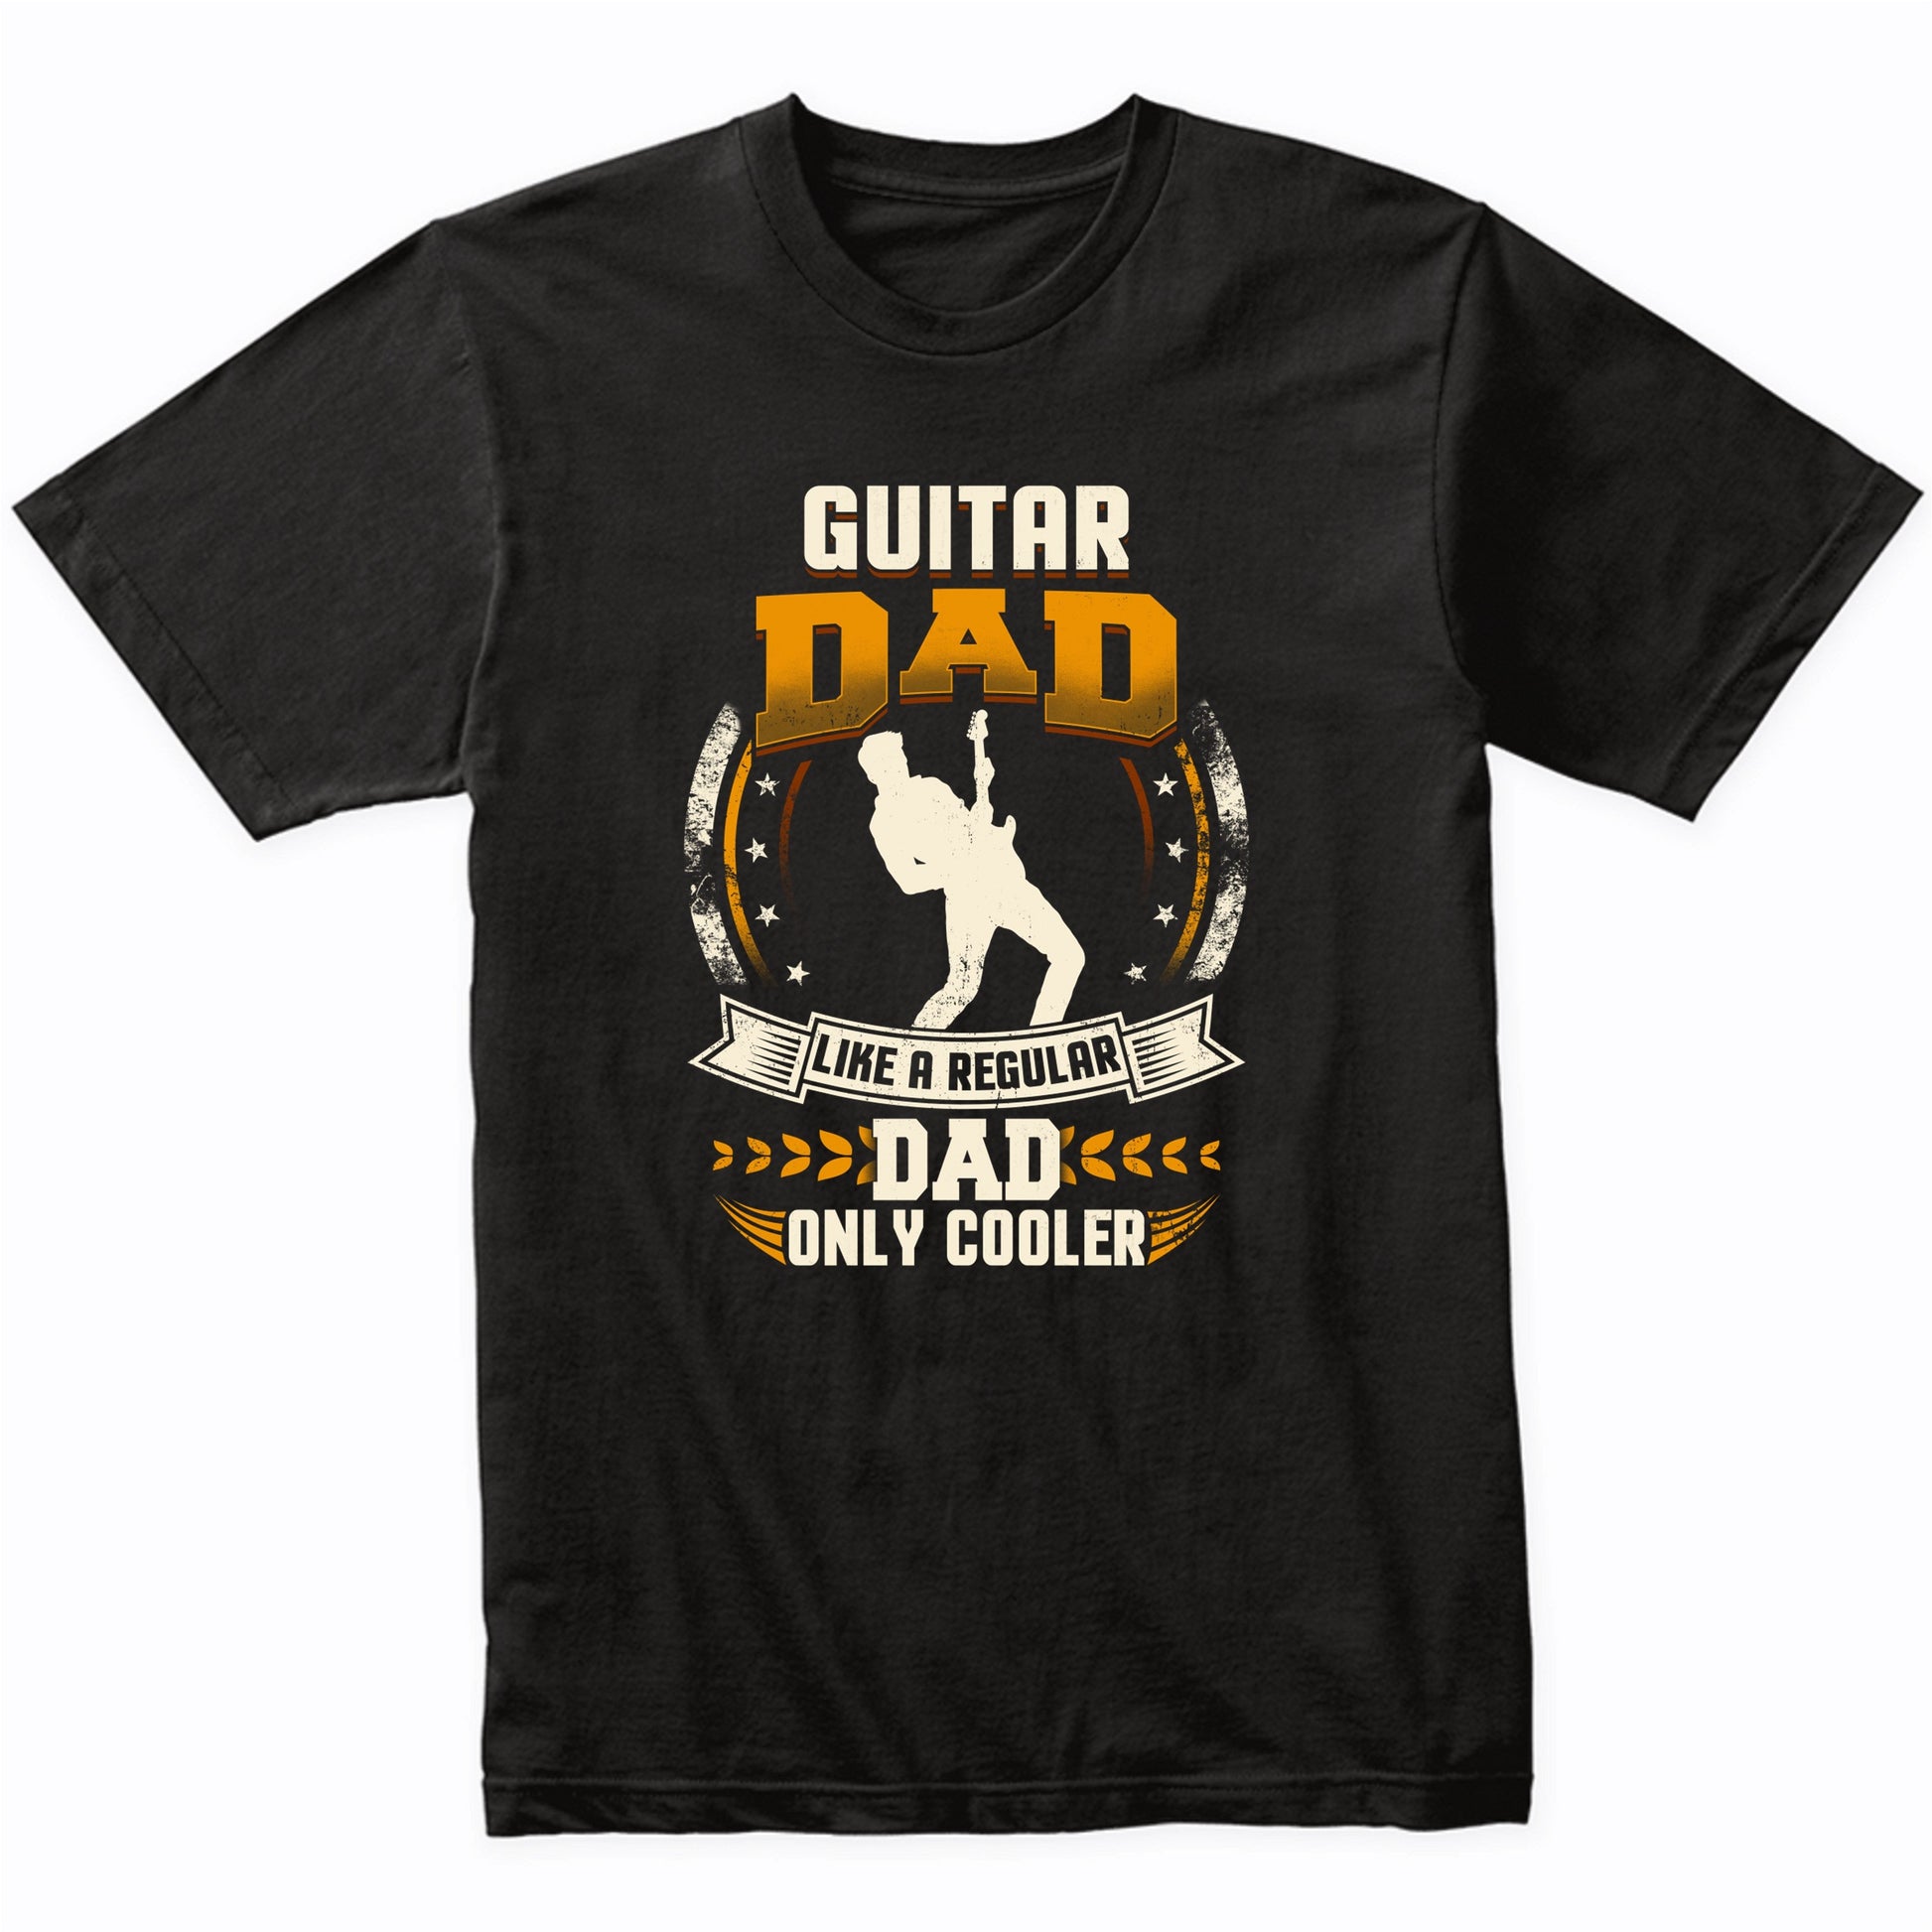 Guitar Dad Like A Regular Dad Only Cooler Funny T-Shirt